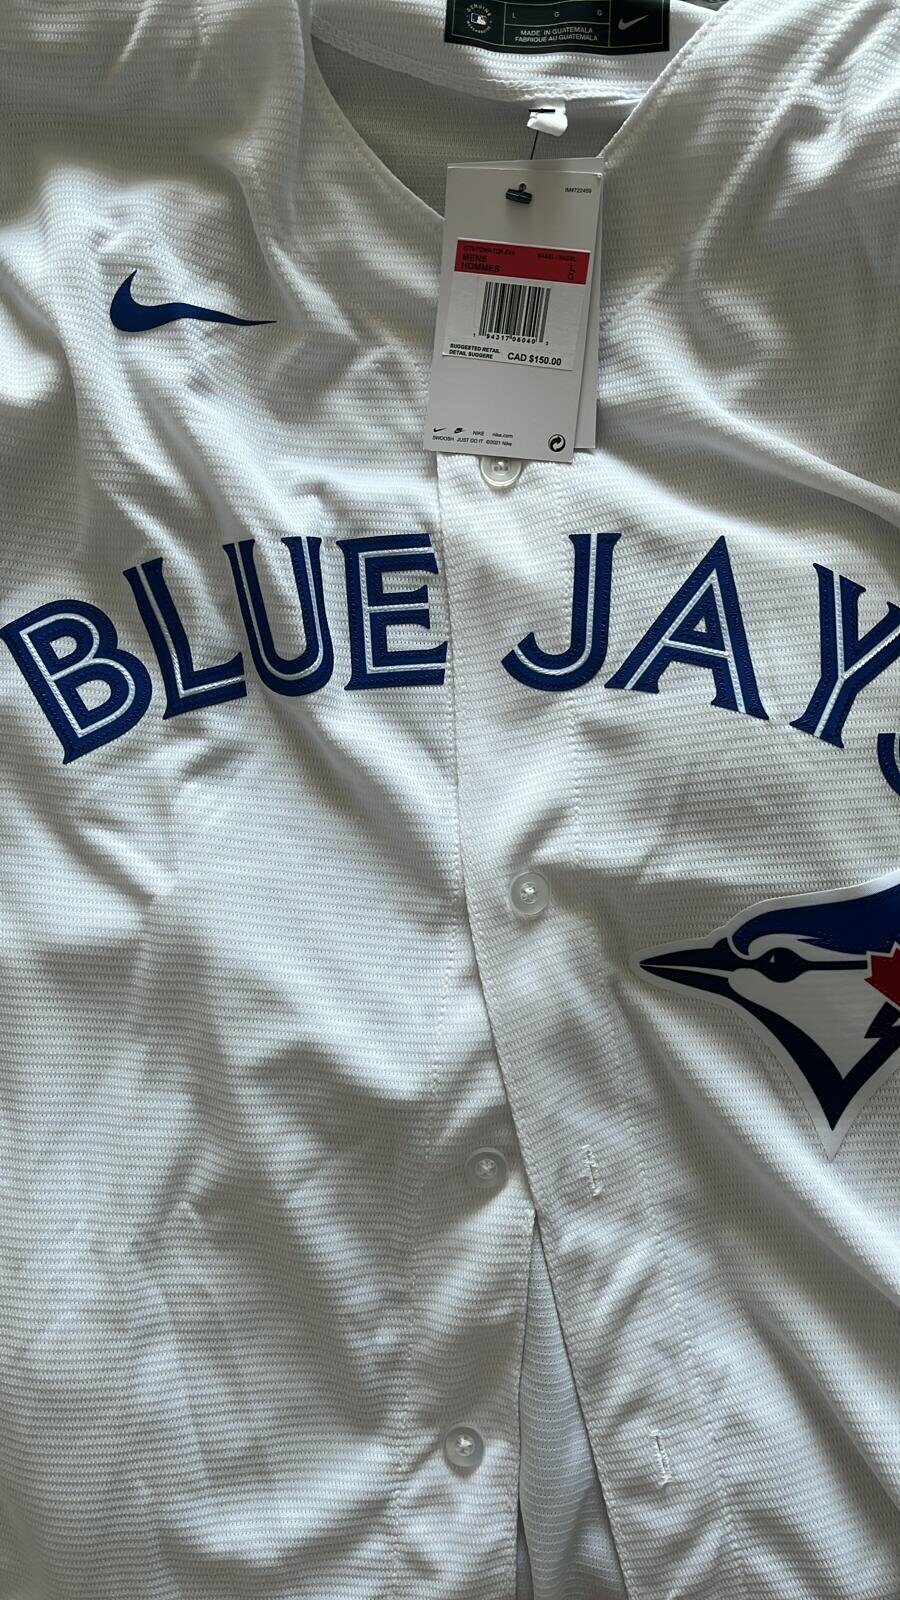 Piper2381: Toronto Blue Jays Promotional Replica Jersey 2014